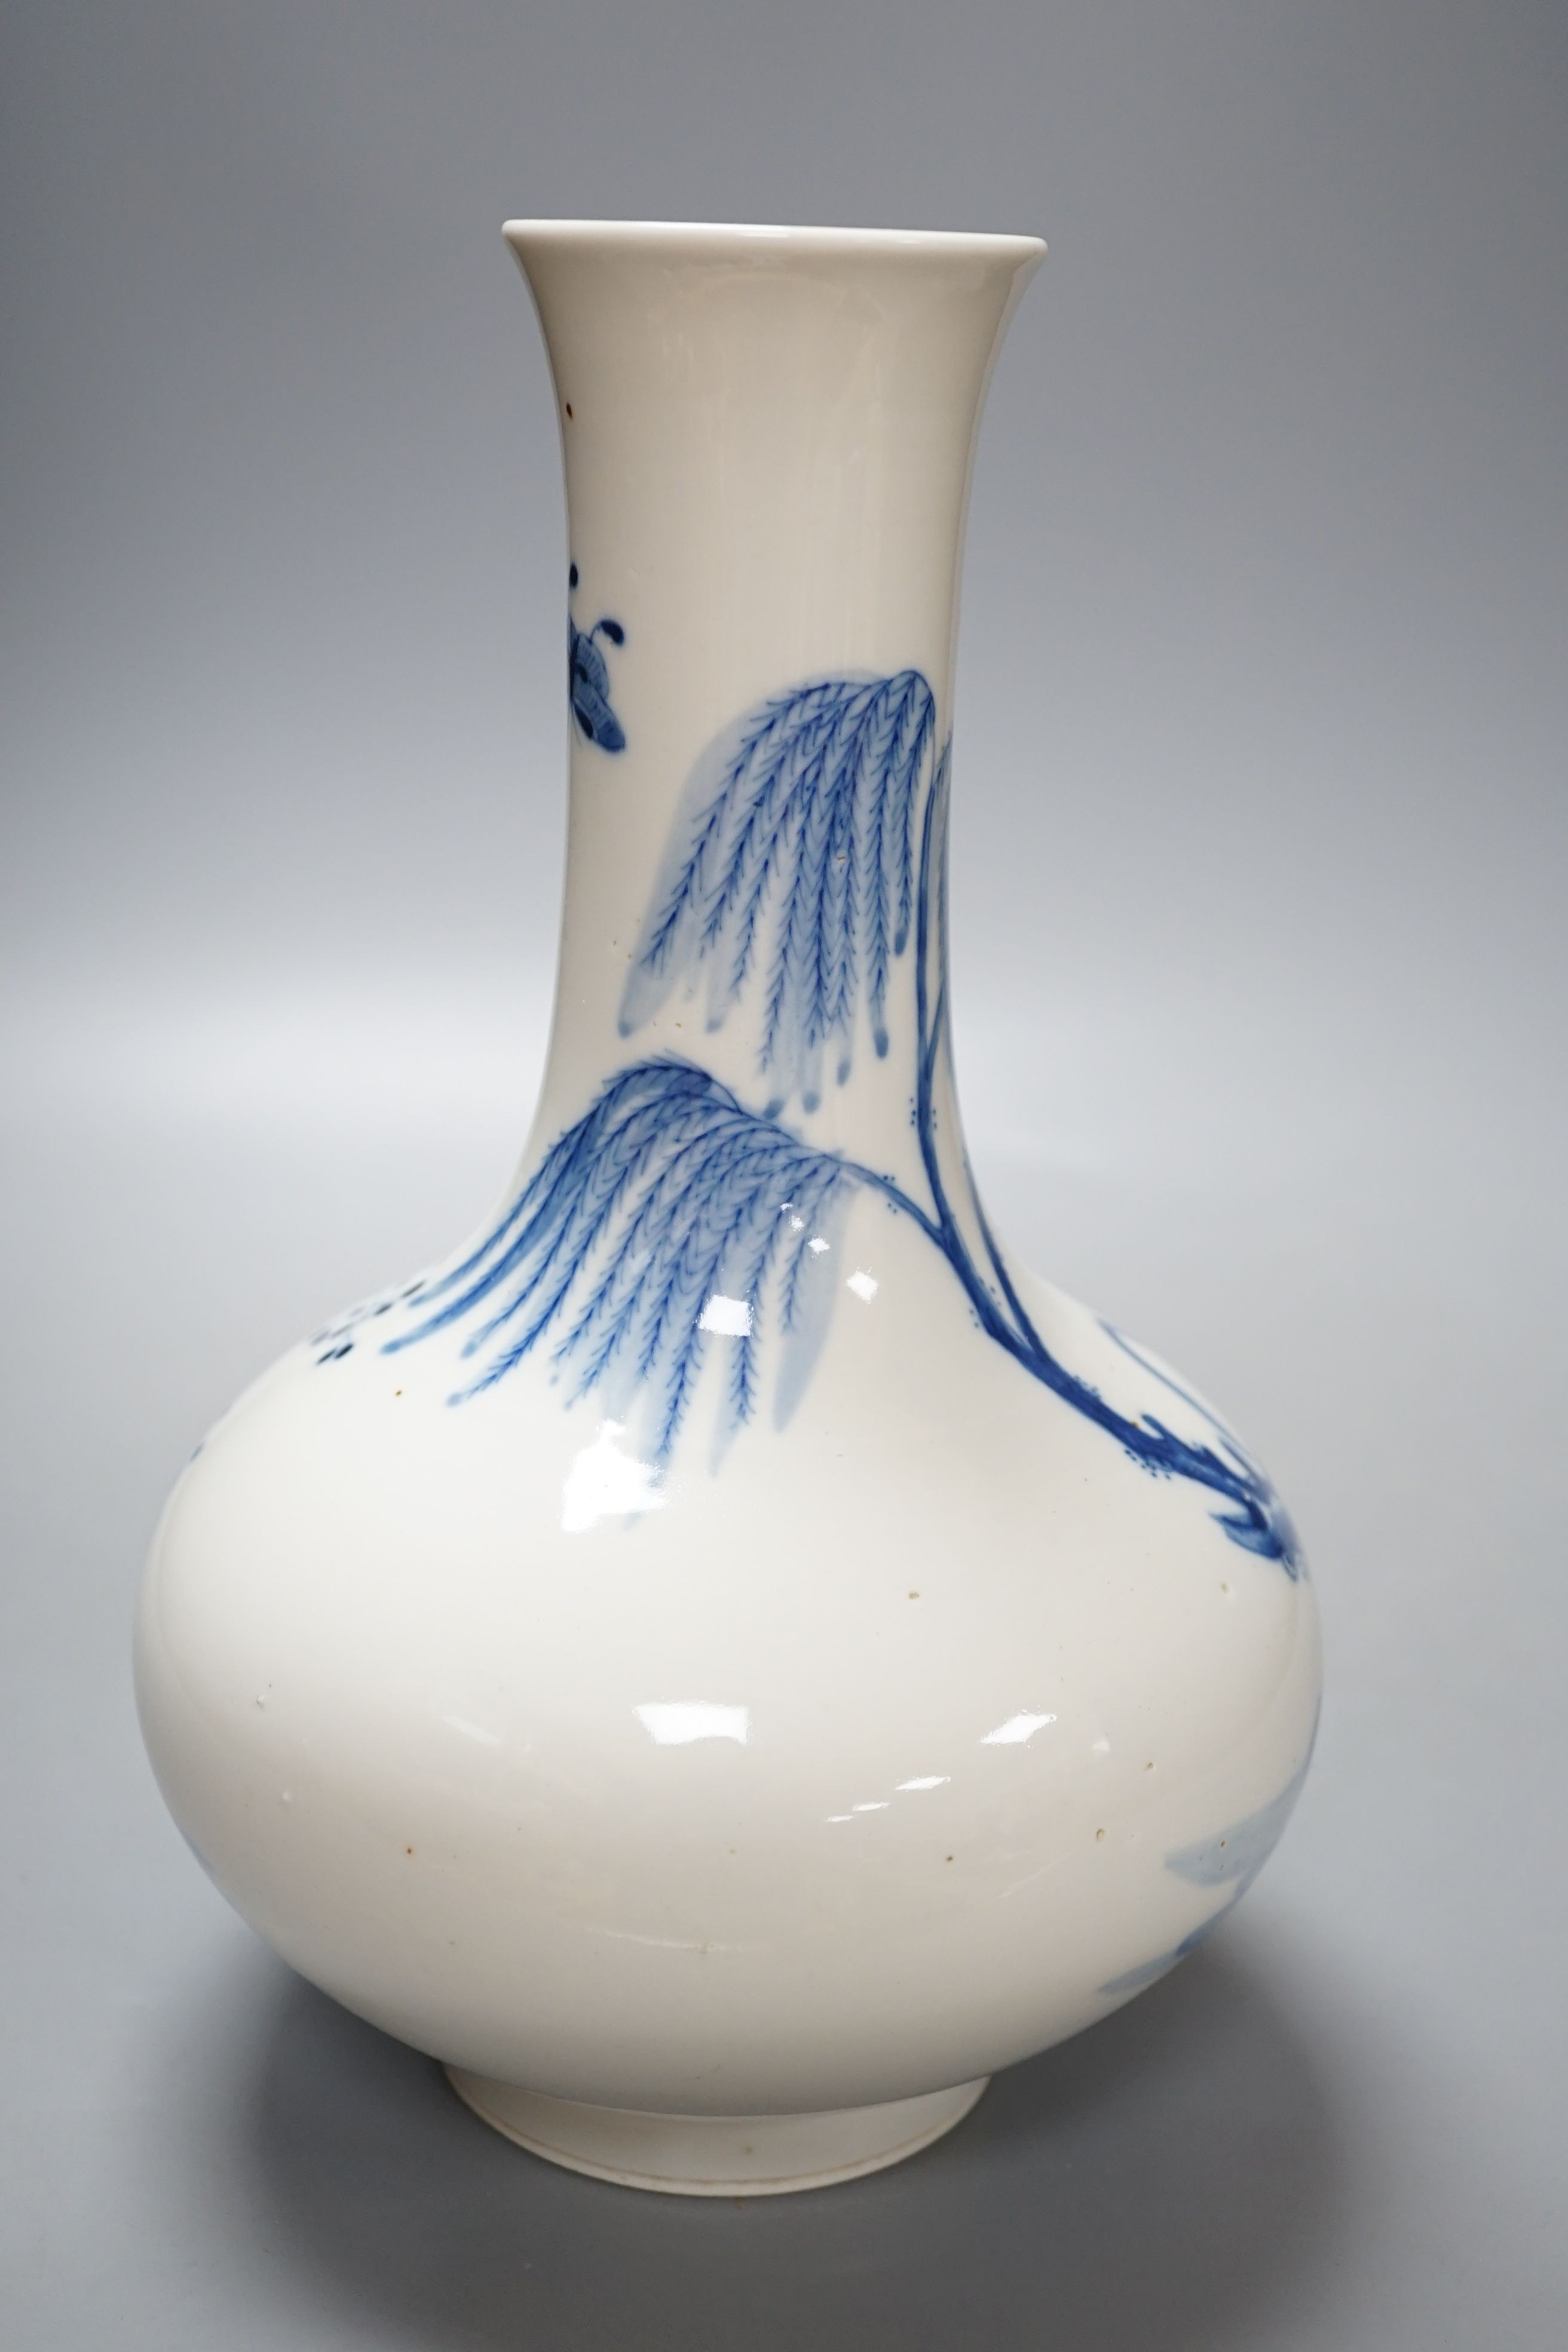 A Chinese blue and white glazed porcelain bottle vase - 27cm tall